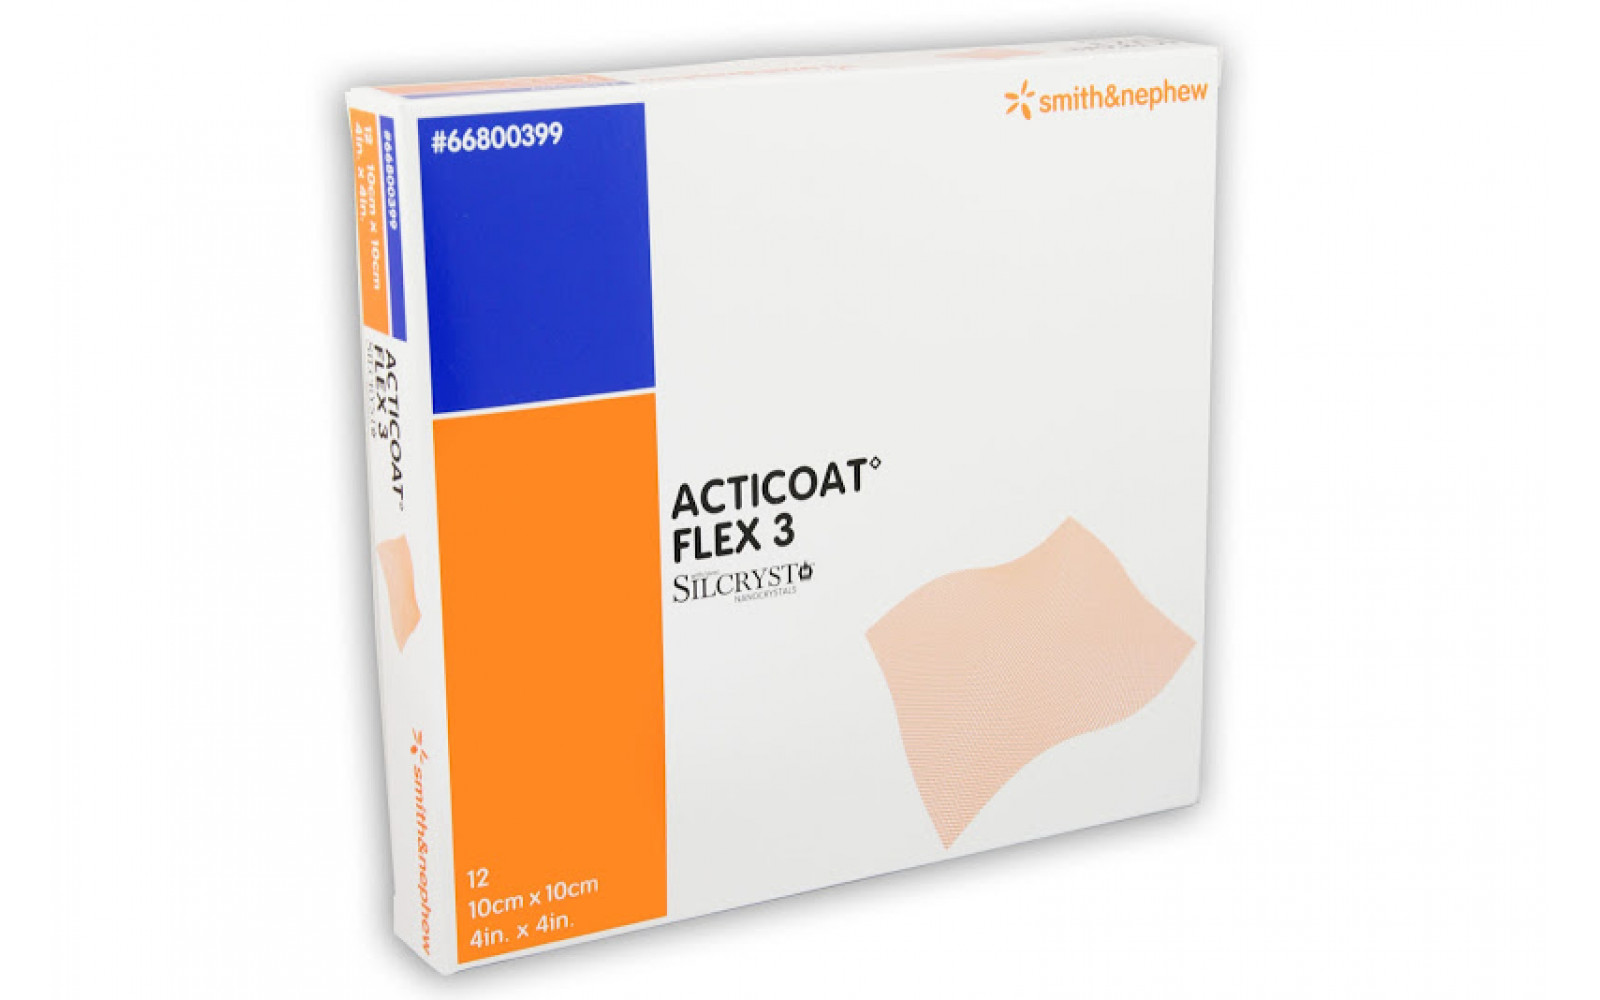 Антимикробная повязка ACTICOAT FLEX 3 (Smith+Nephew)